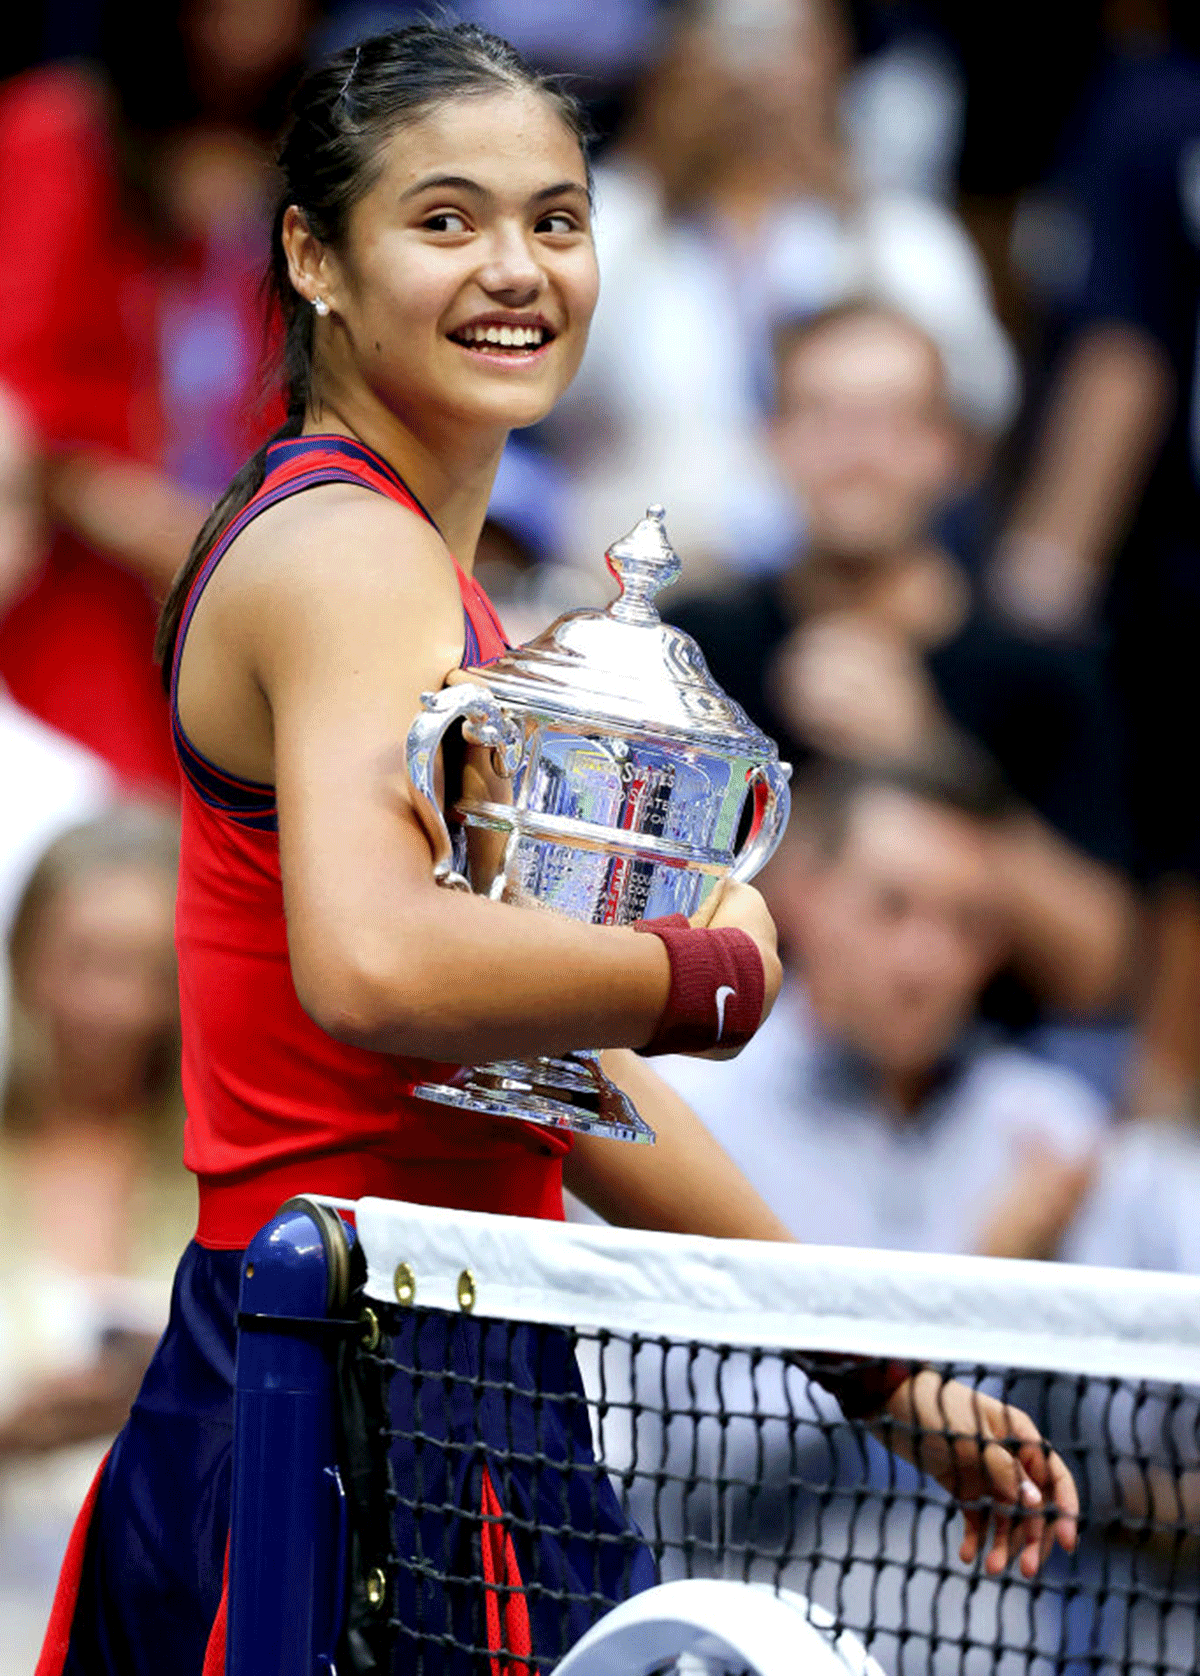 British teen Emma Raducanu got the Royal family celebrating her success at the US Open